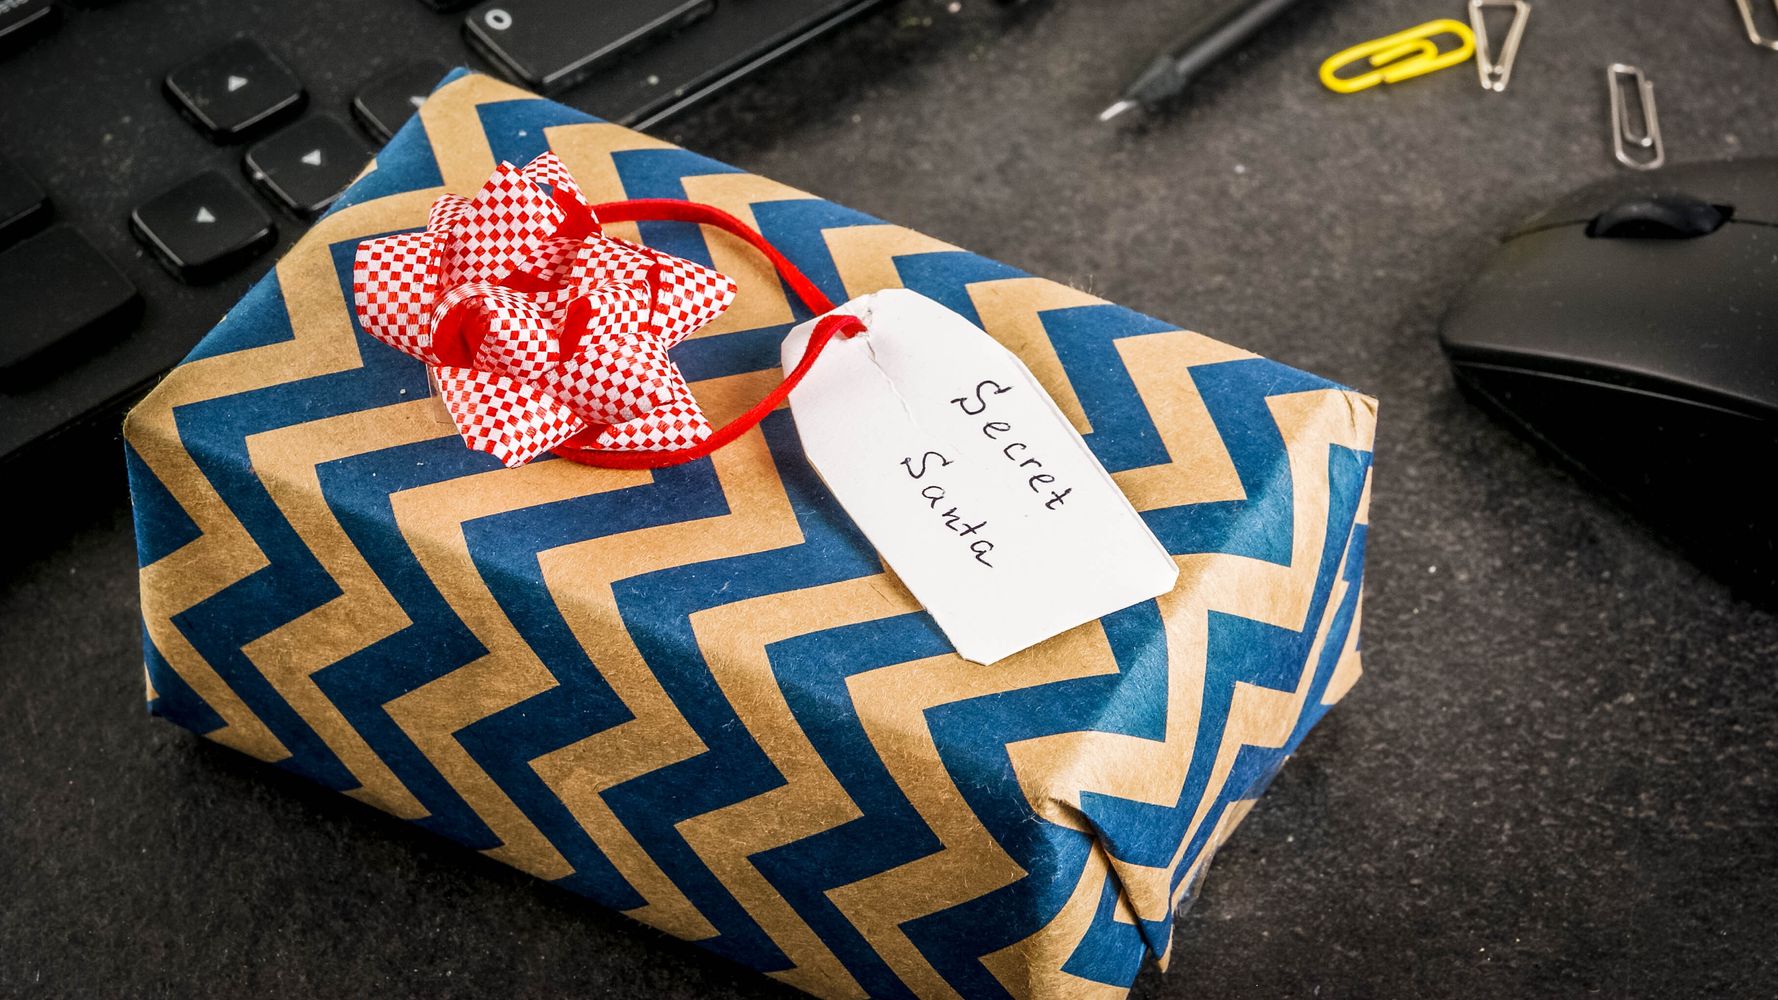 How To Do A Virtual Secret Santa Gift Exchange That’s Actually Fun This Year